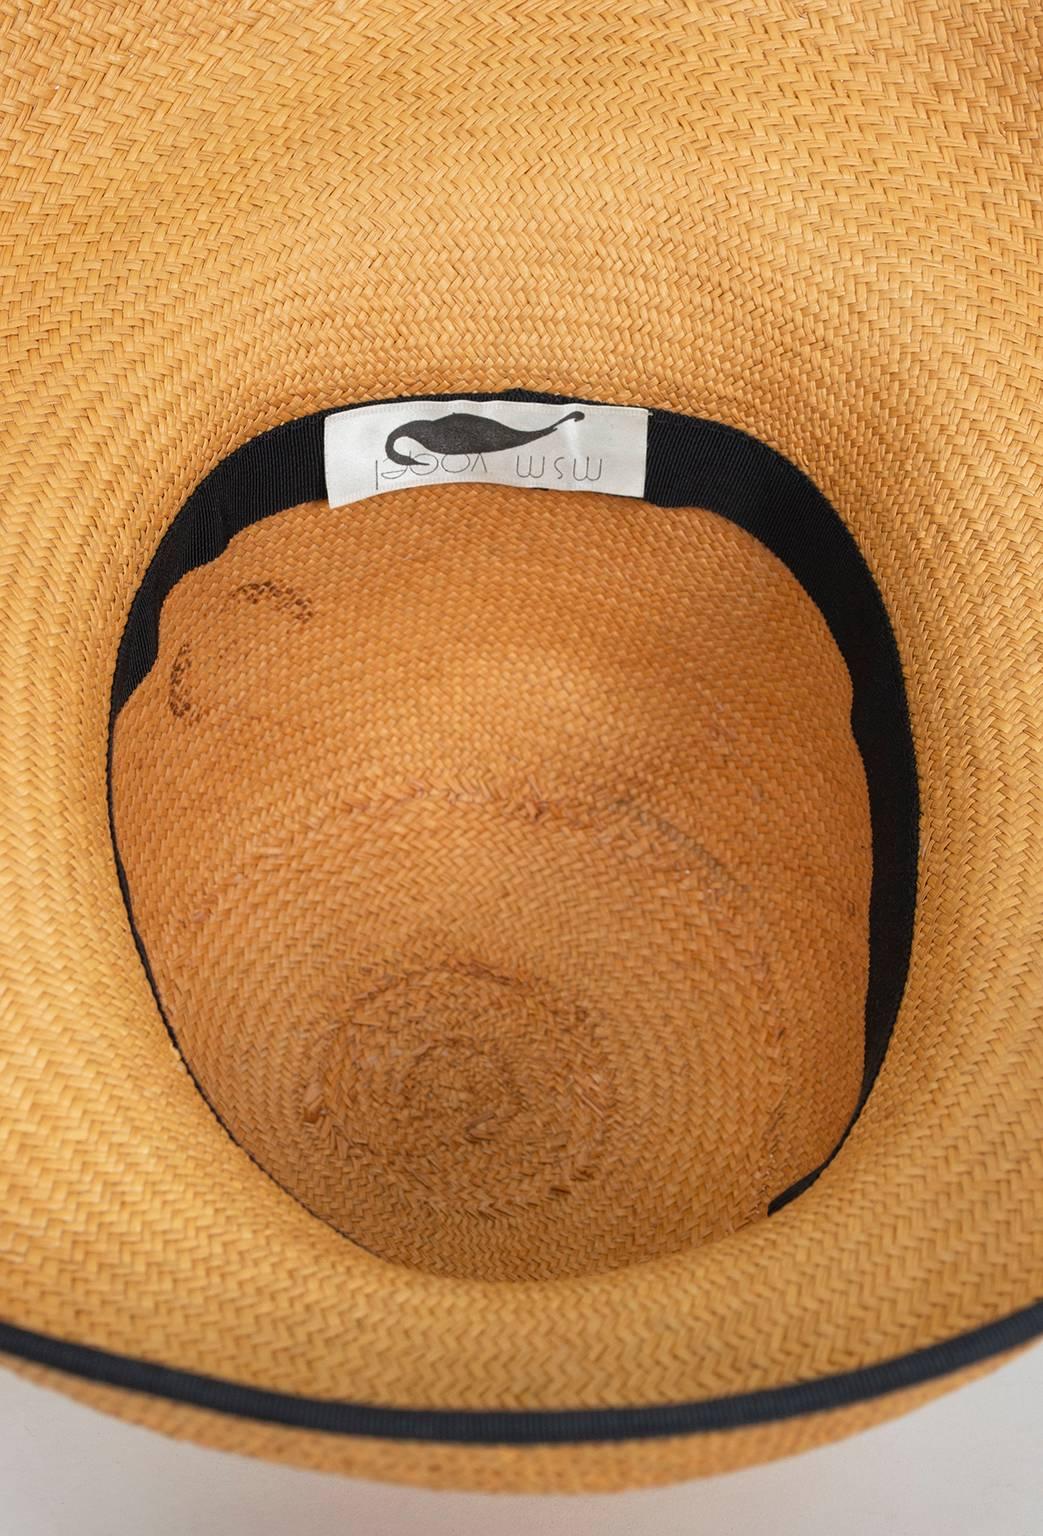 Women's Natural Straw Bucket Sun Hat with Black Grosgrain Trim, 1960s